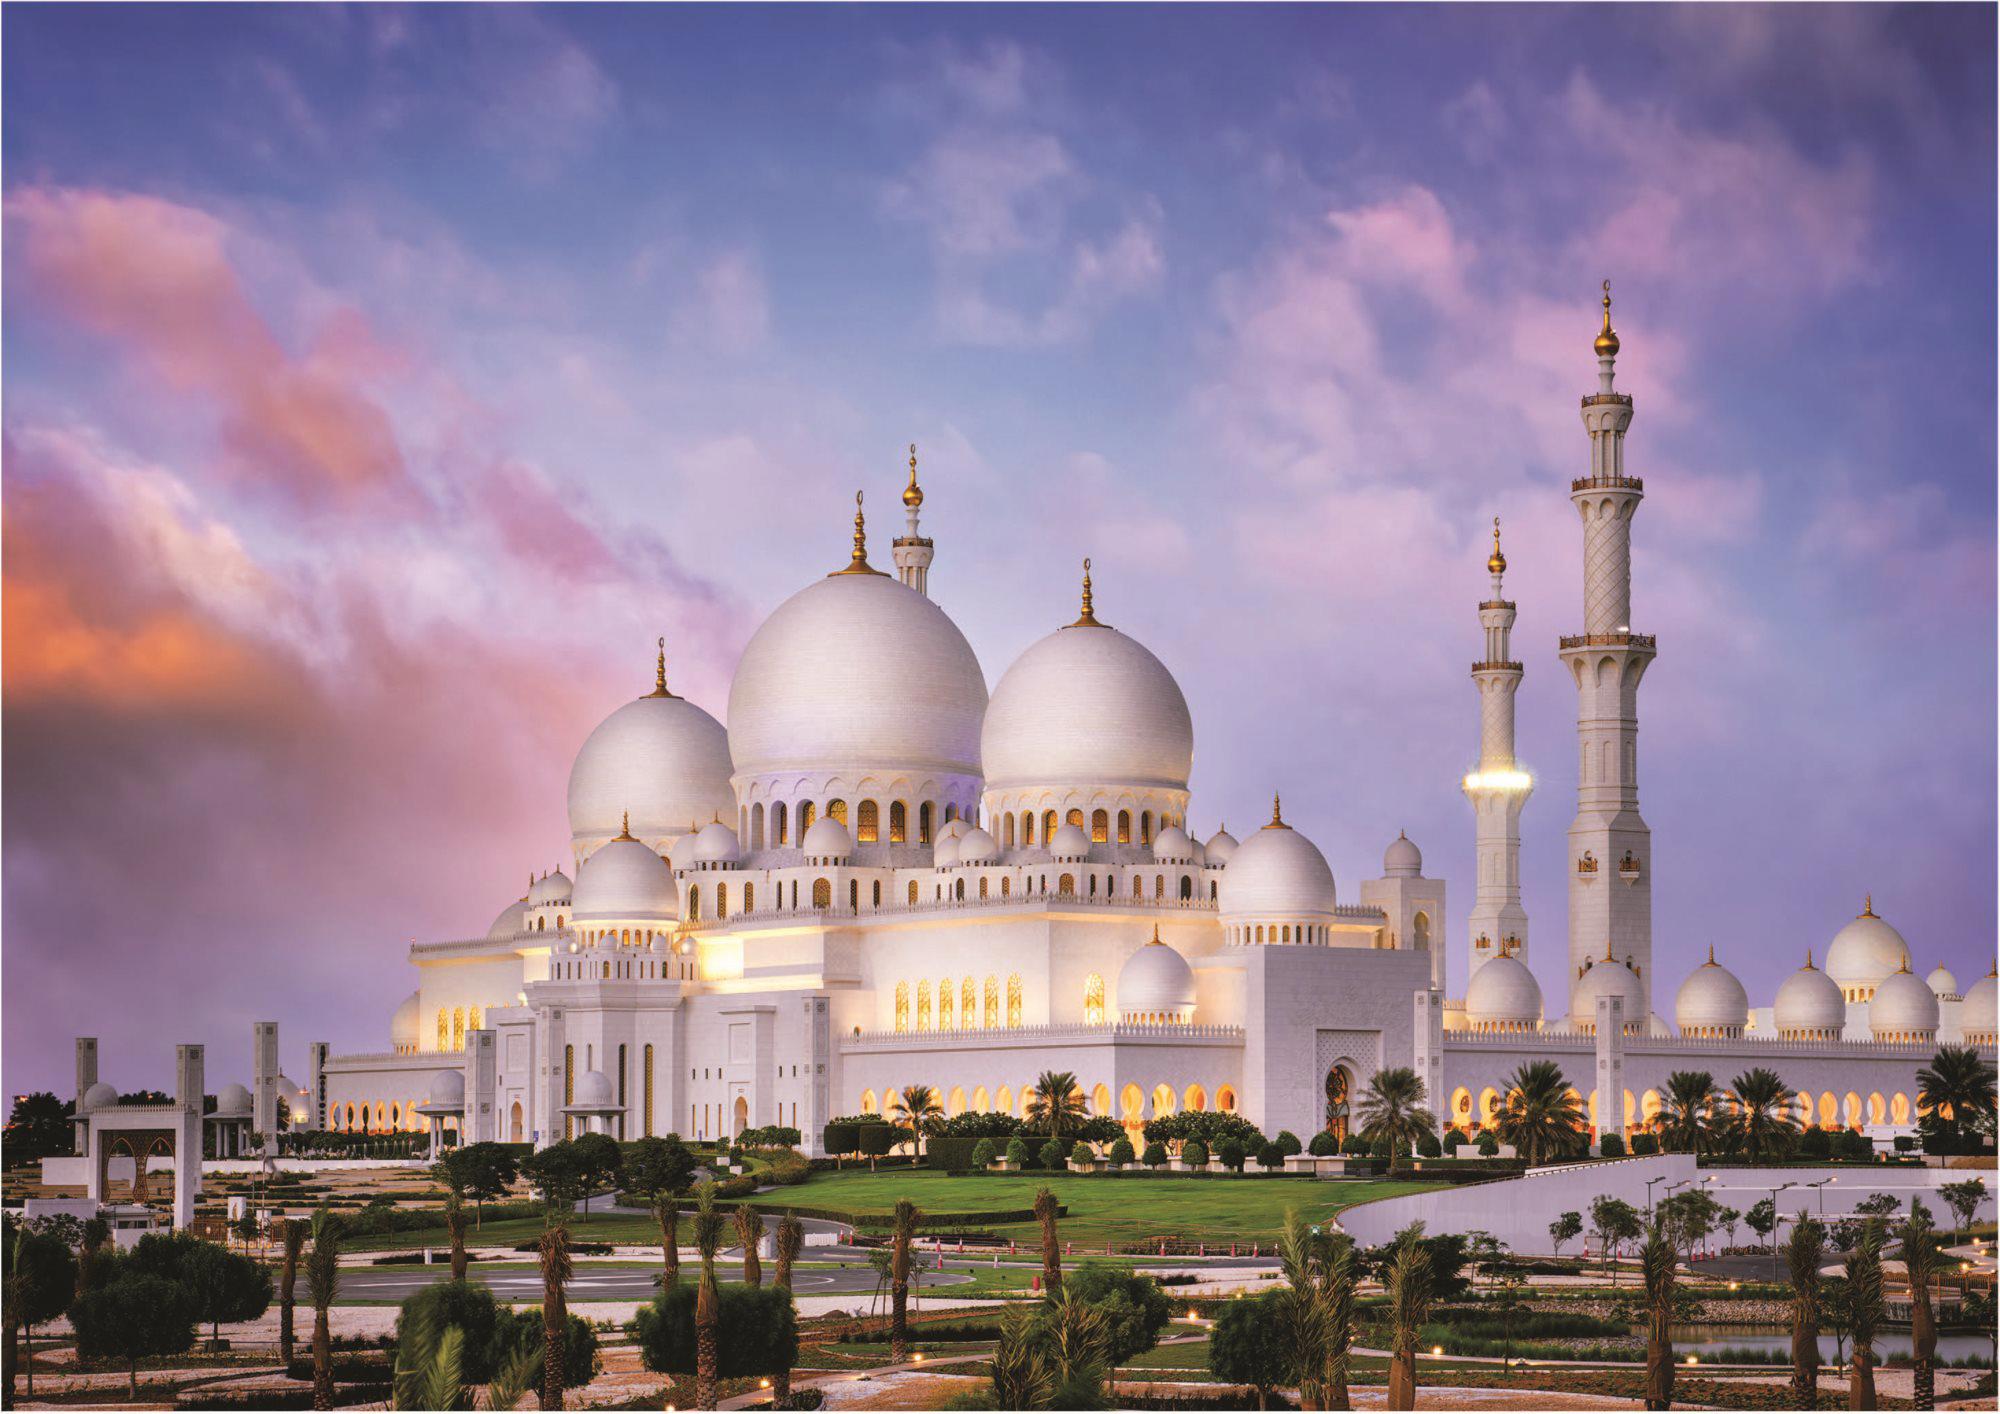 Puzzle Velika džamija šeika Zayeda